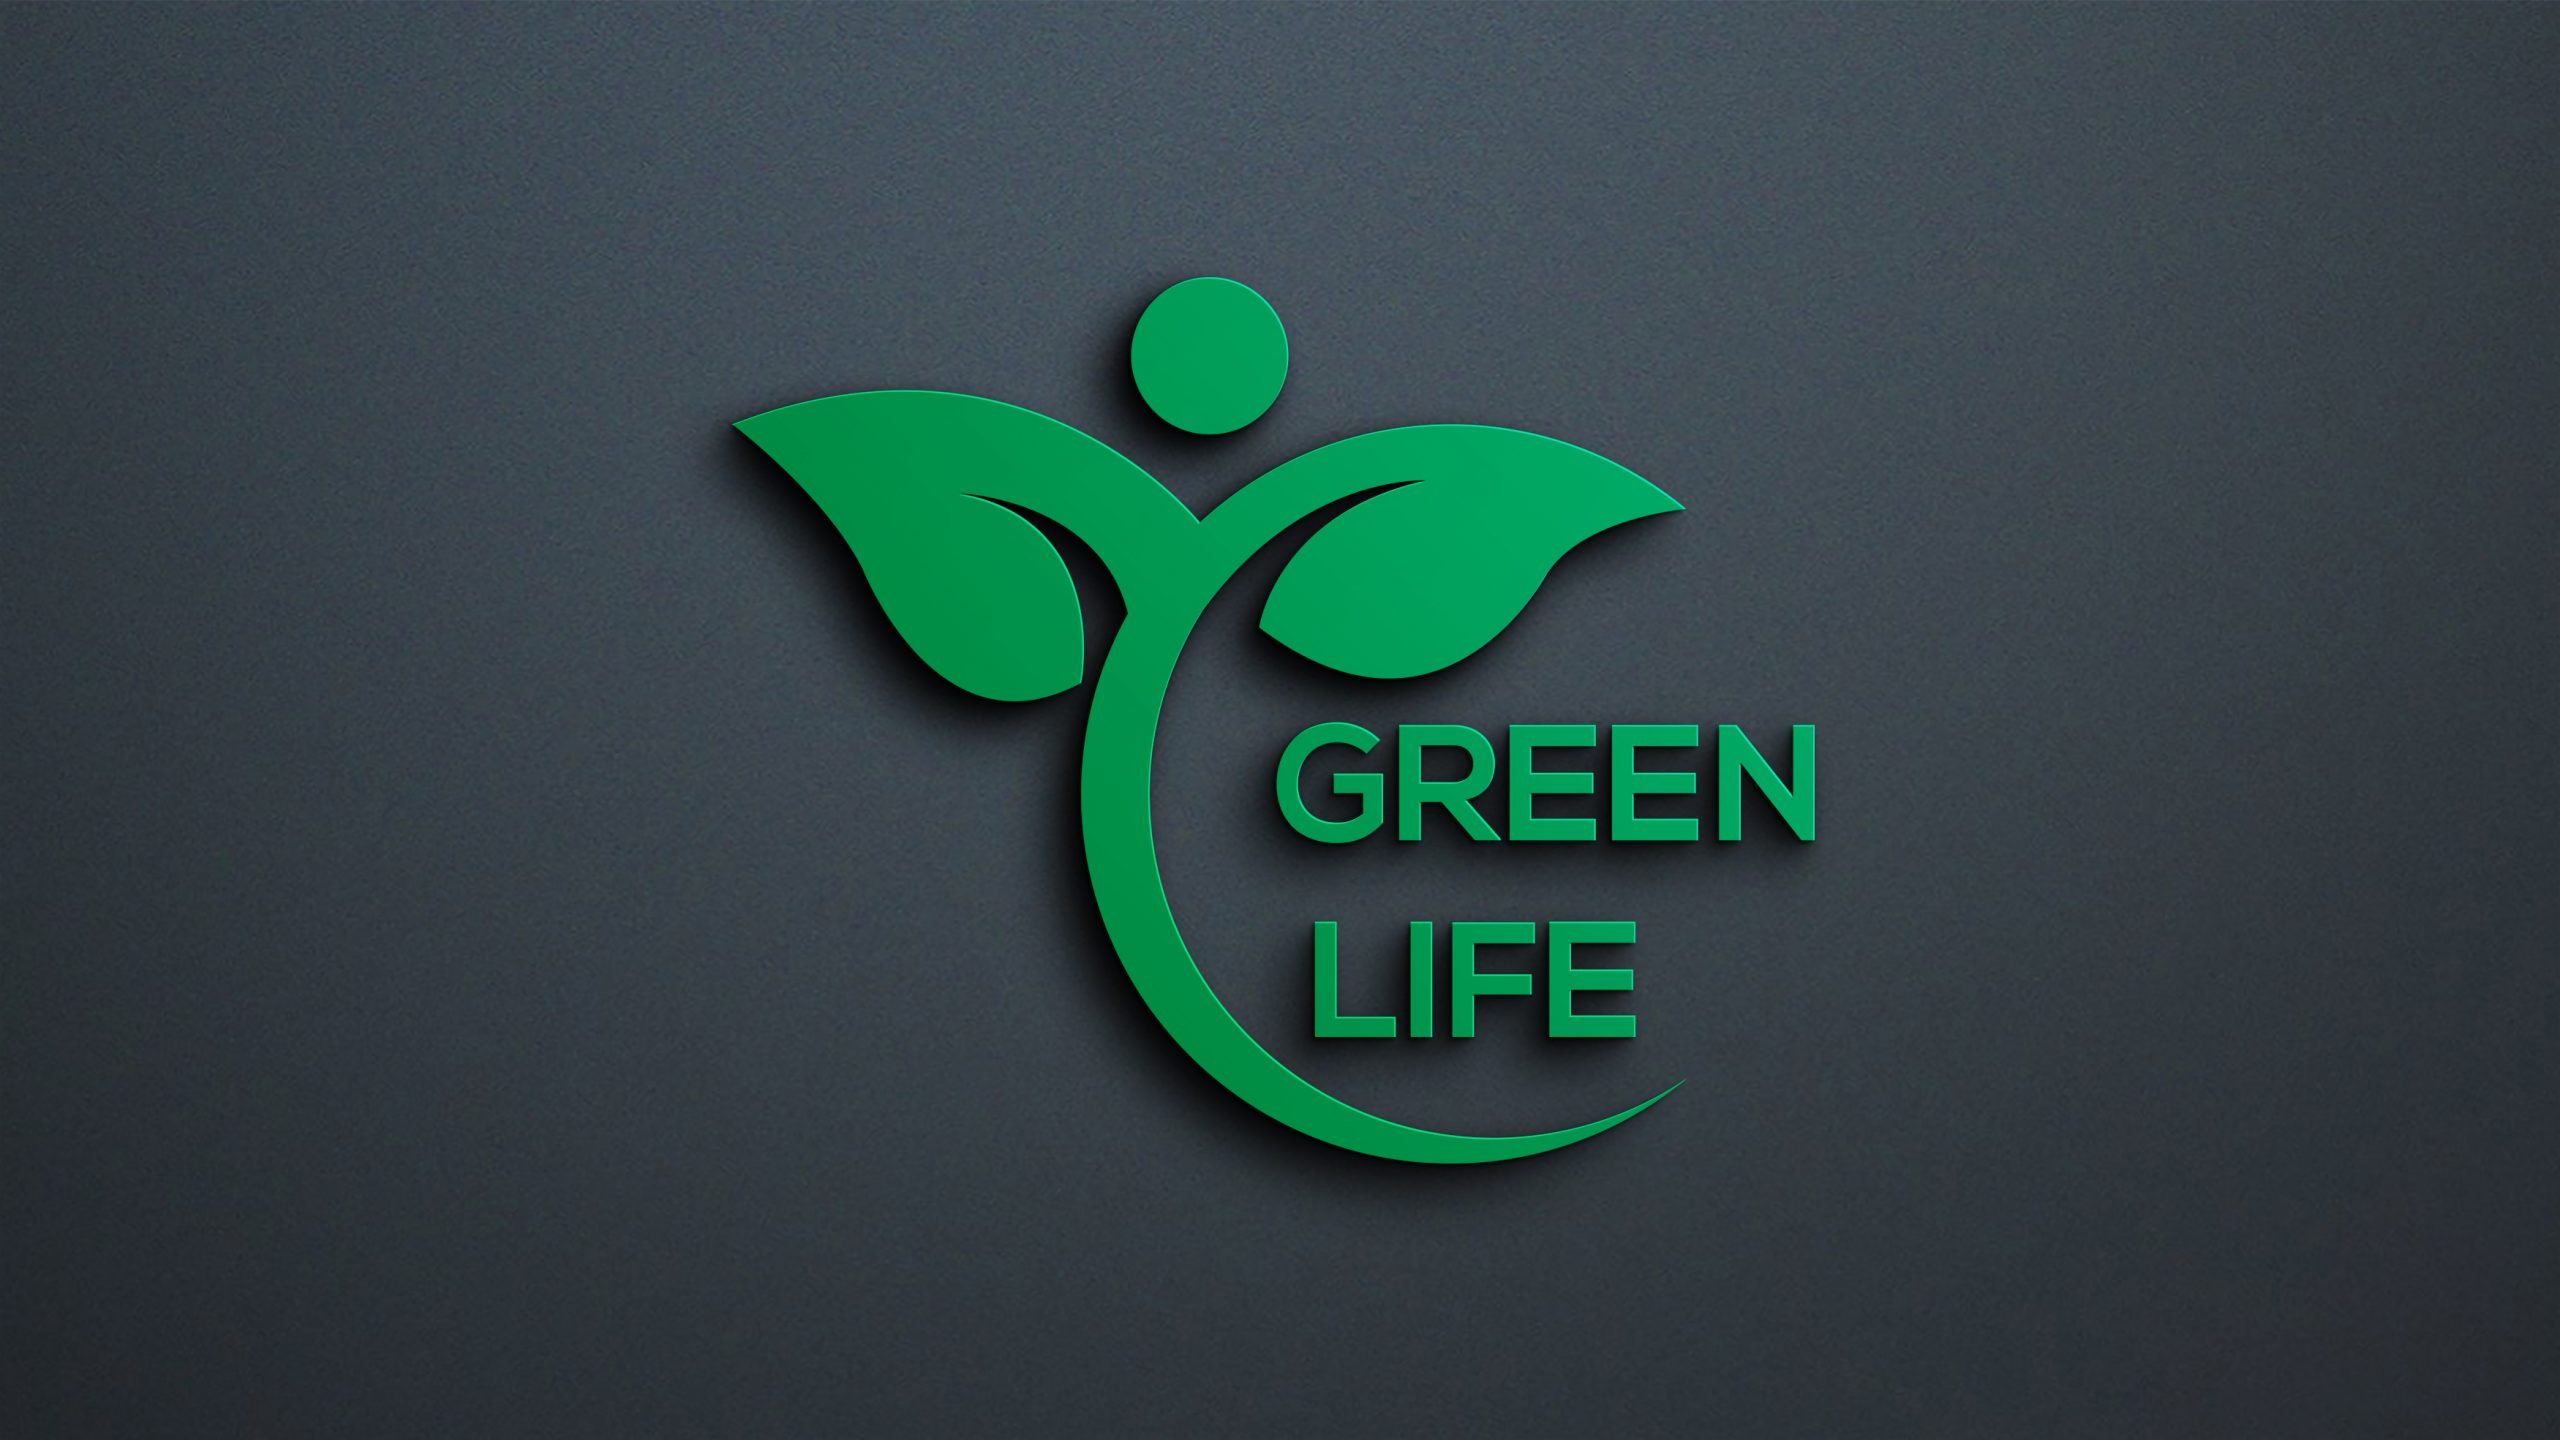 Share more than 65 life logo images - ceg.edu.vn